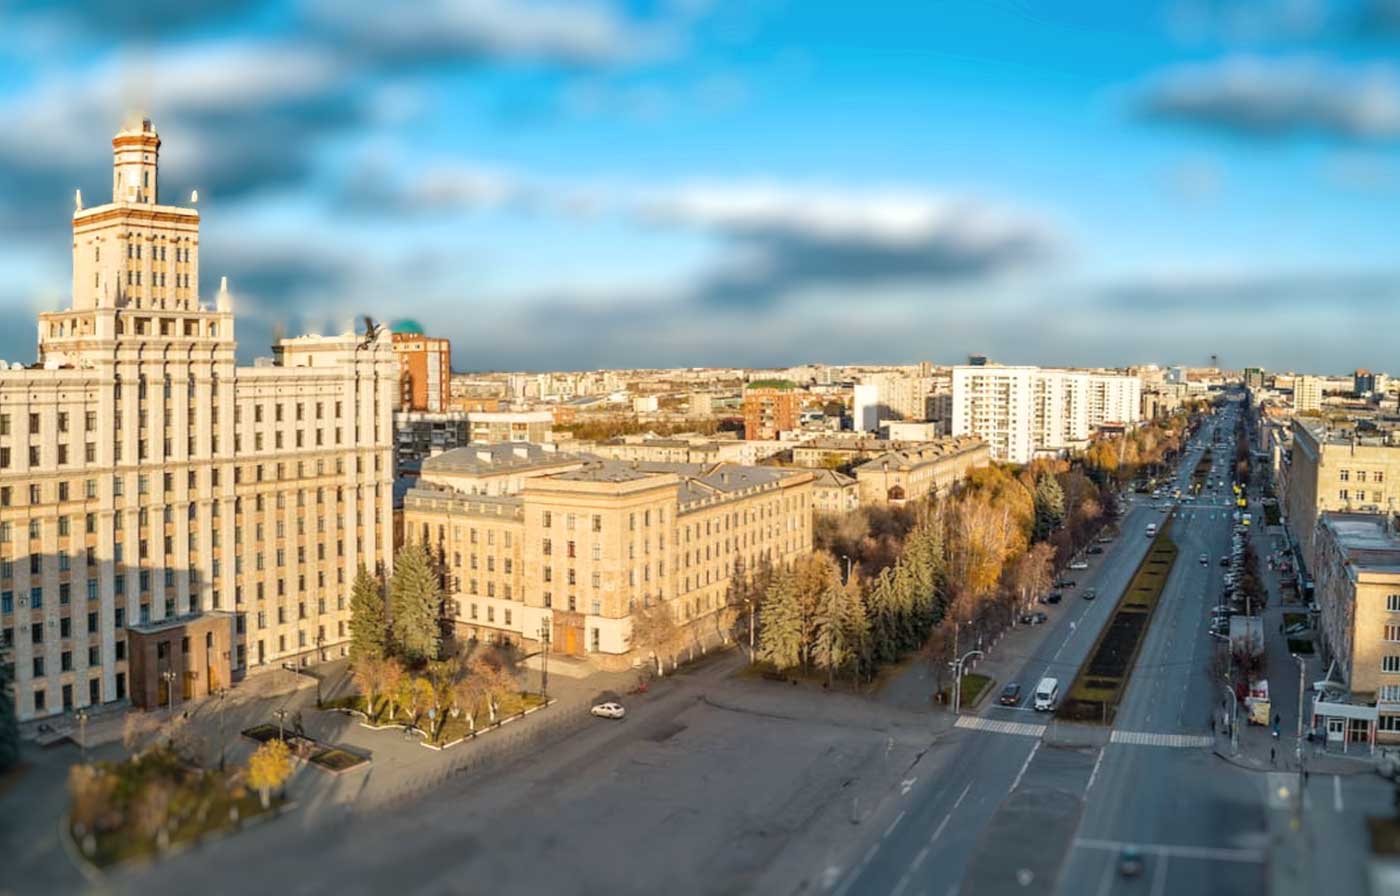 Chelyabinsk City